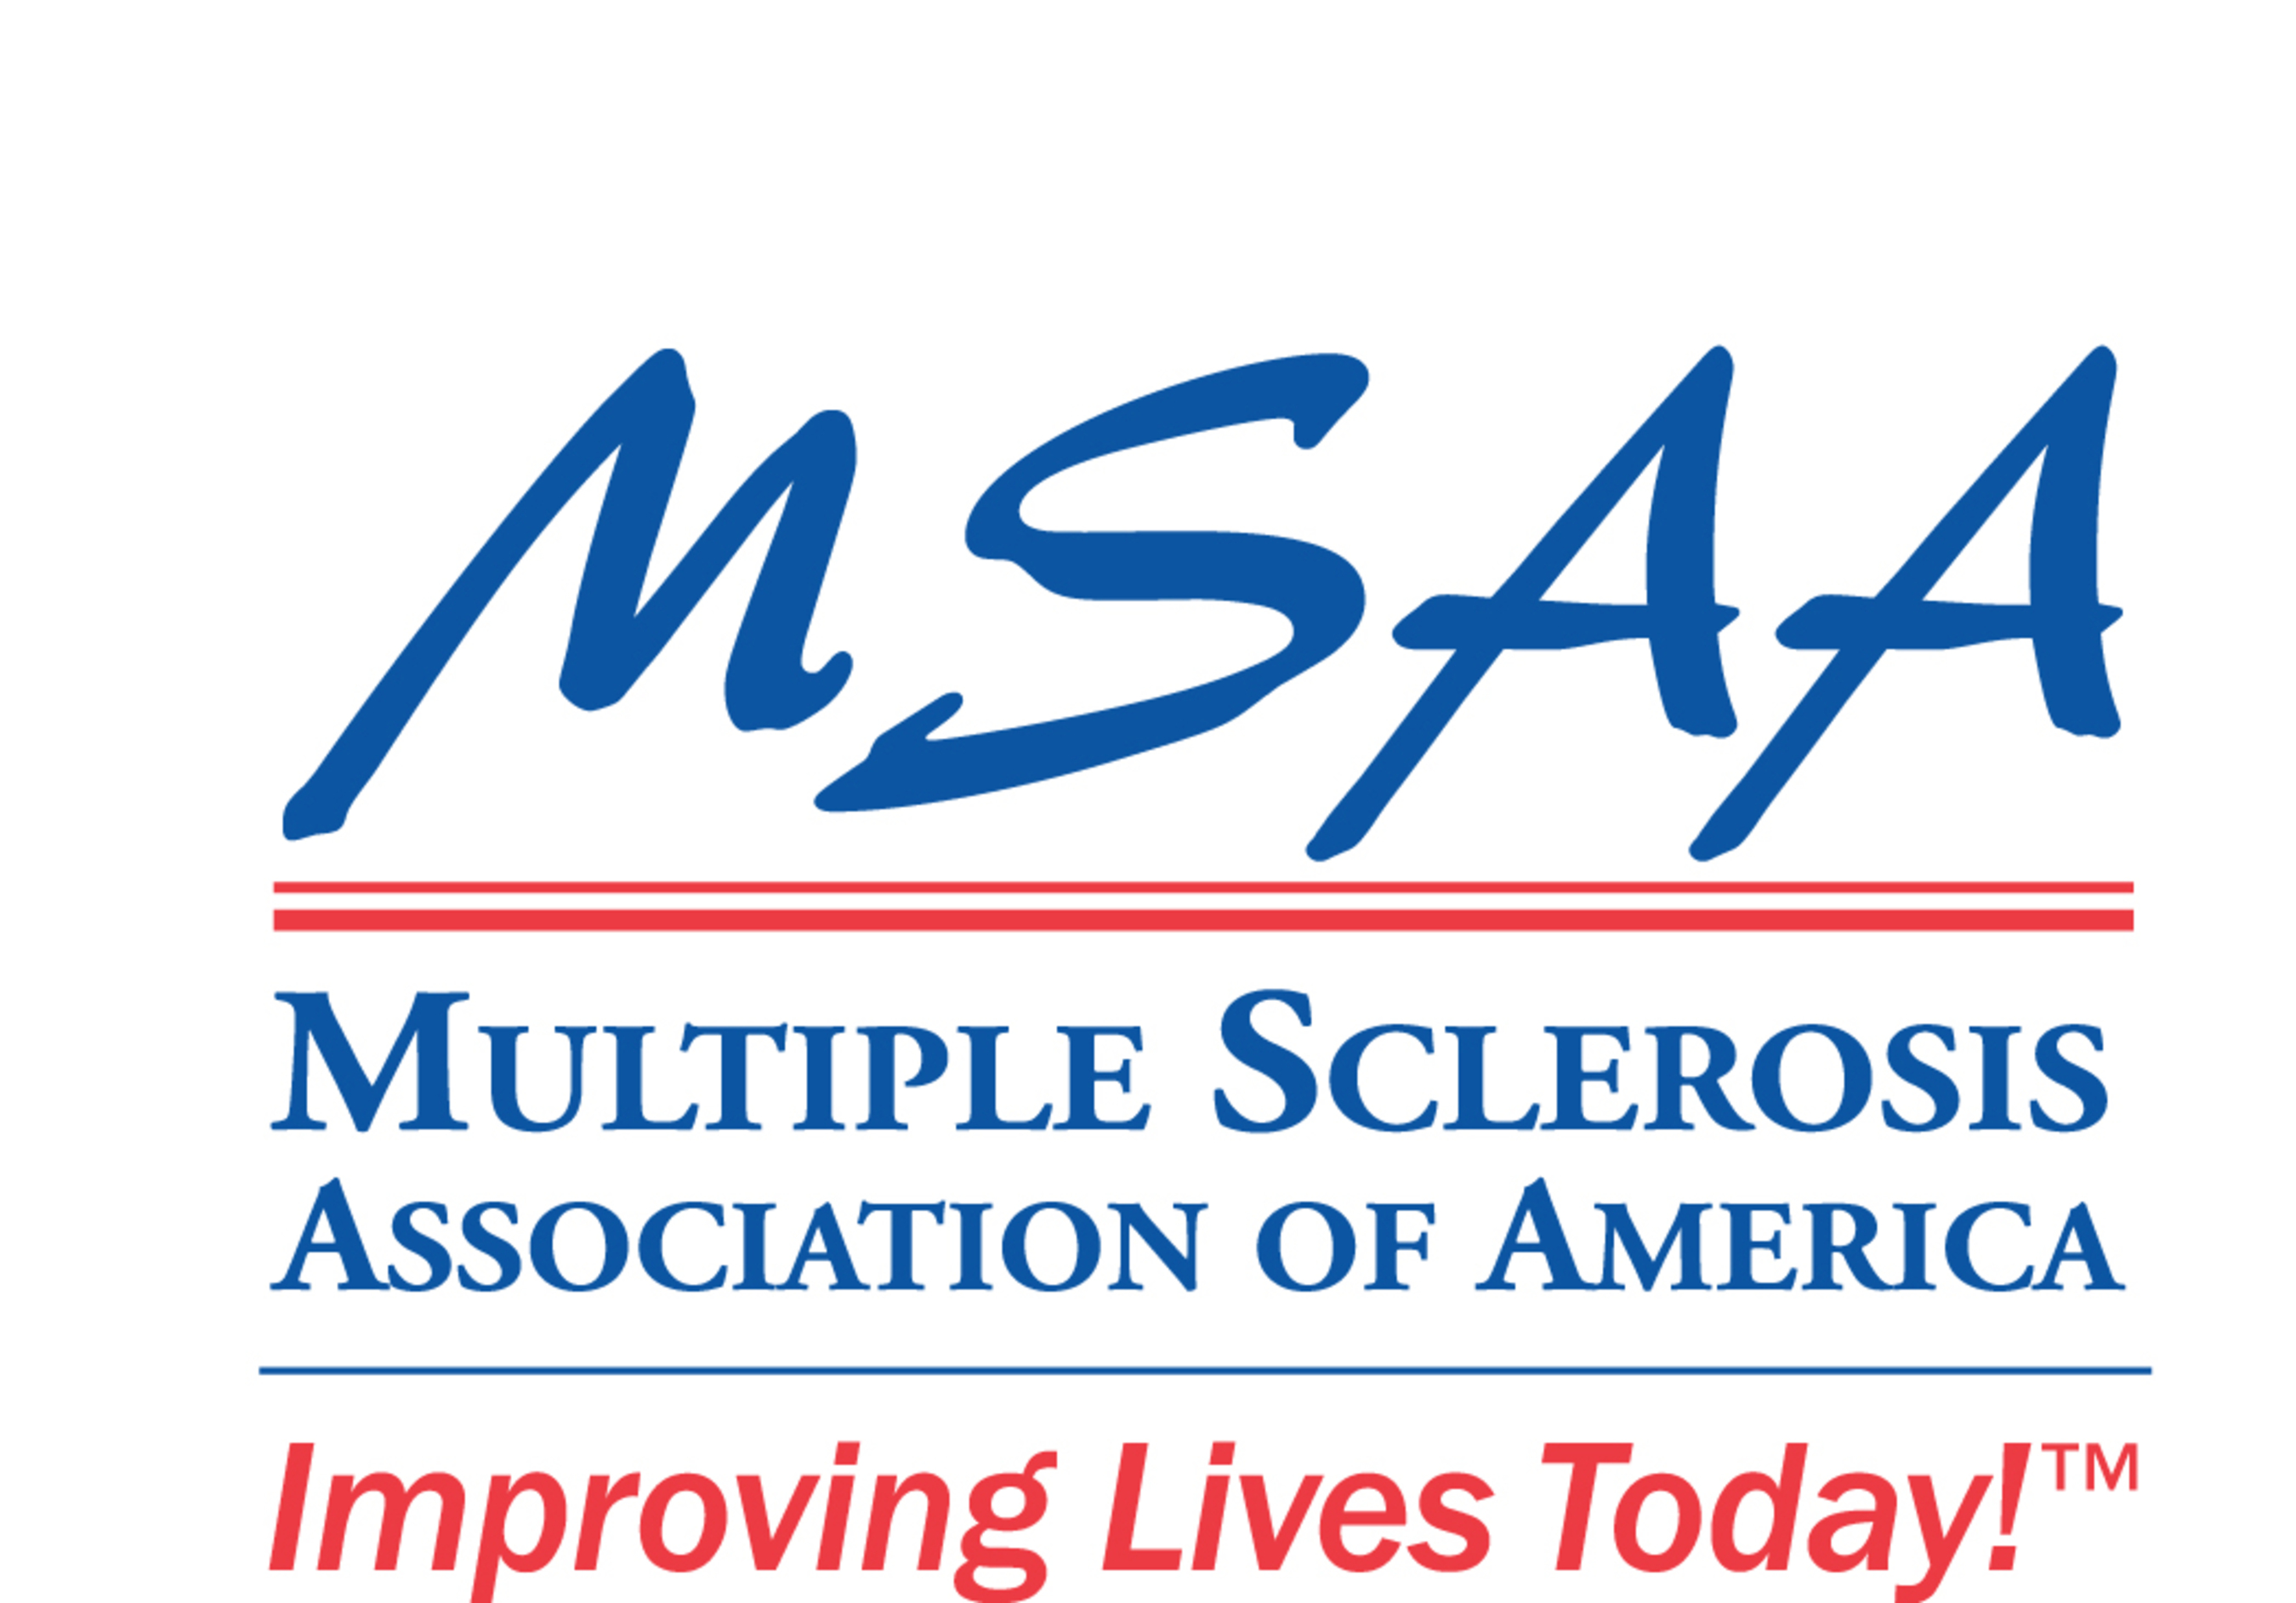 Multiple Sclerosis Association of America logo. (PRNewsFoto/Multiple Sclerosis Association of America) (PRNewsFoto/)